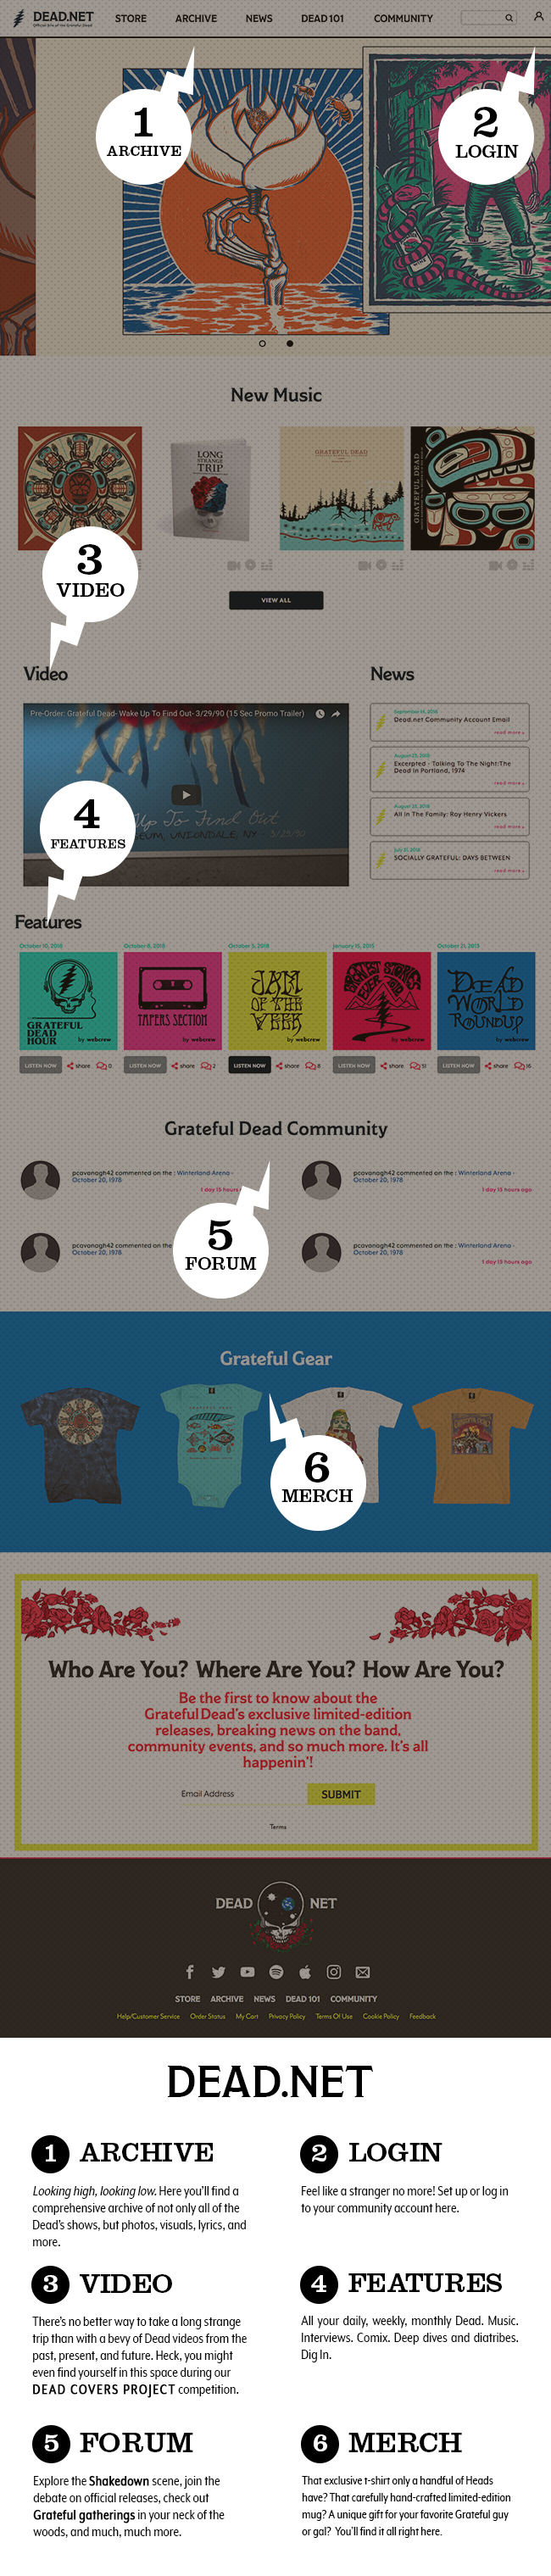 Dead.net Infographic